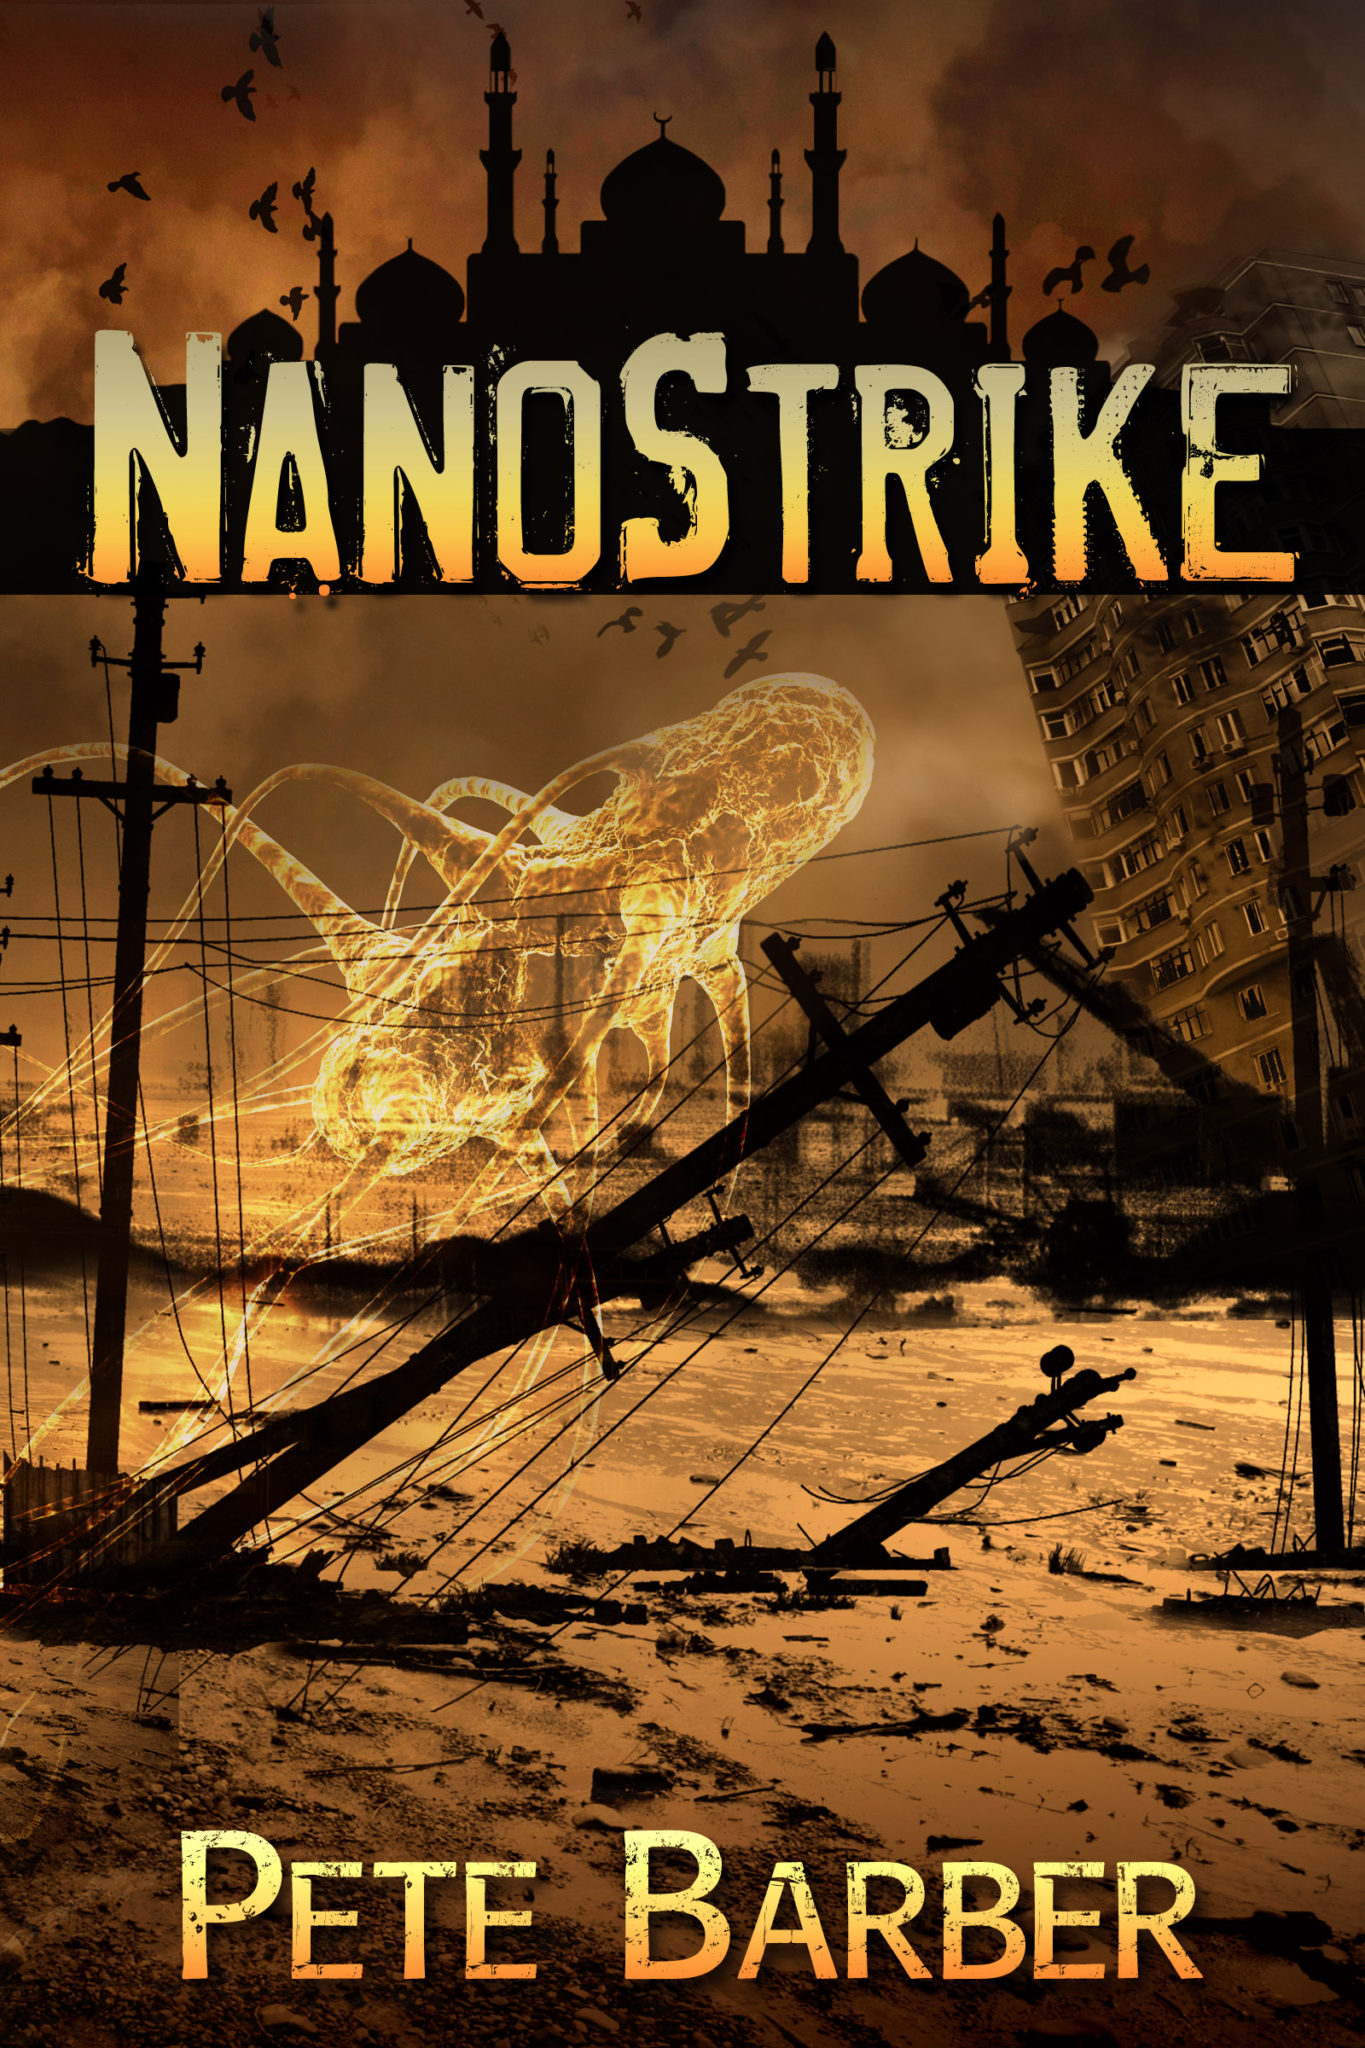 NanoStrike by Pete Barber